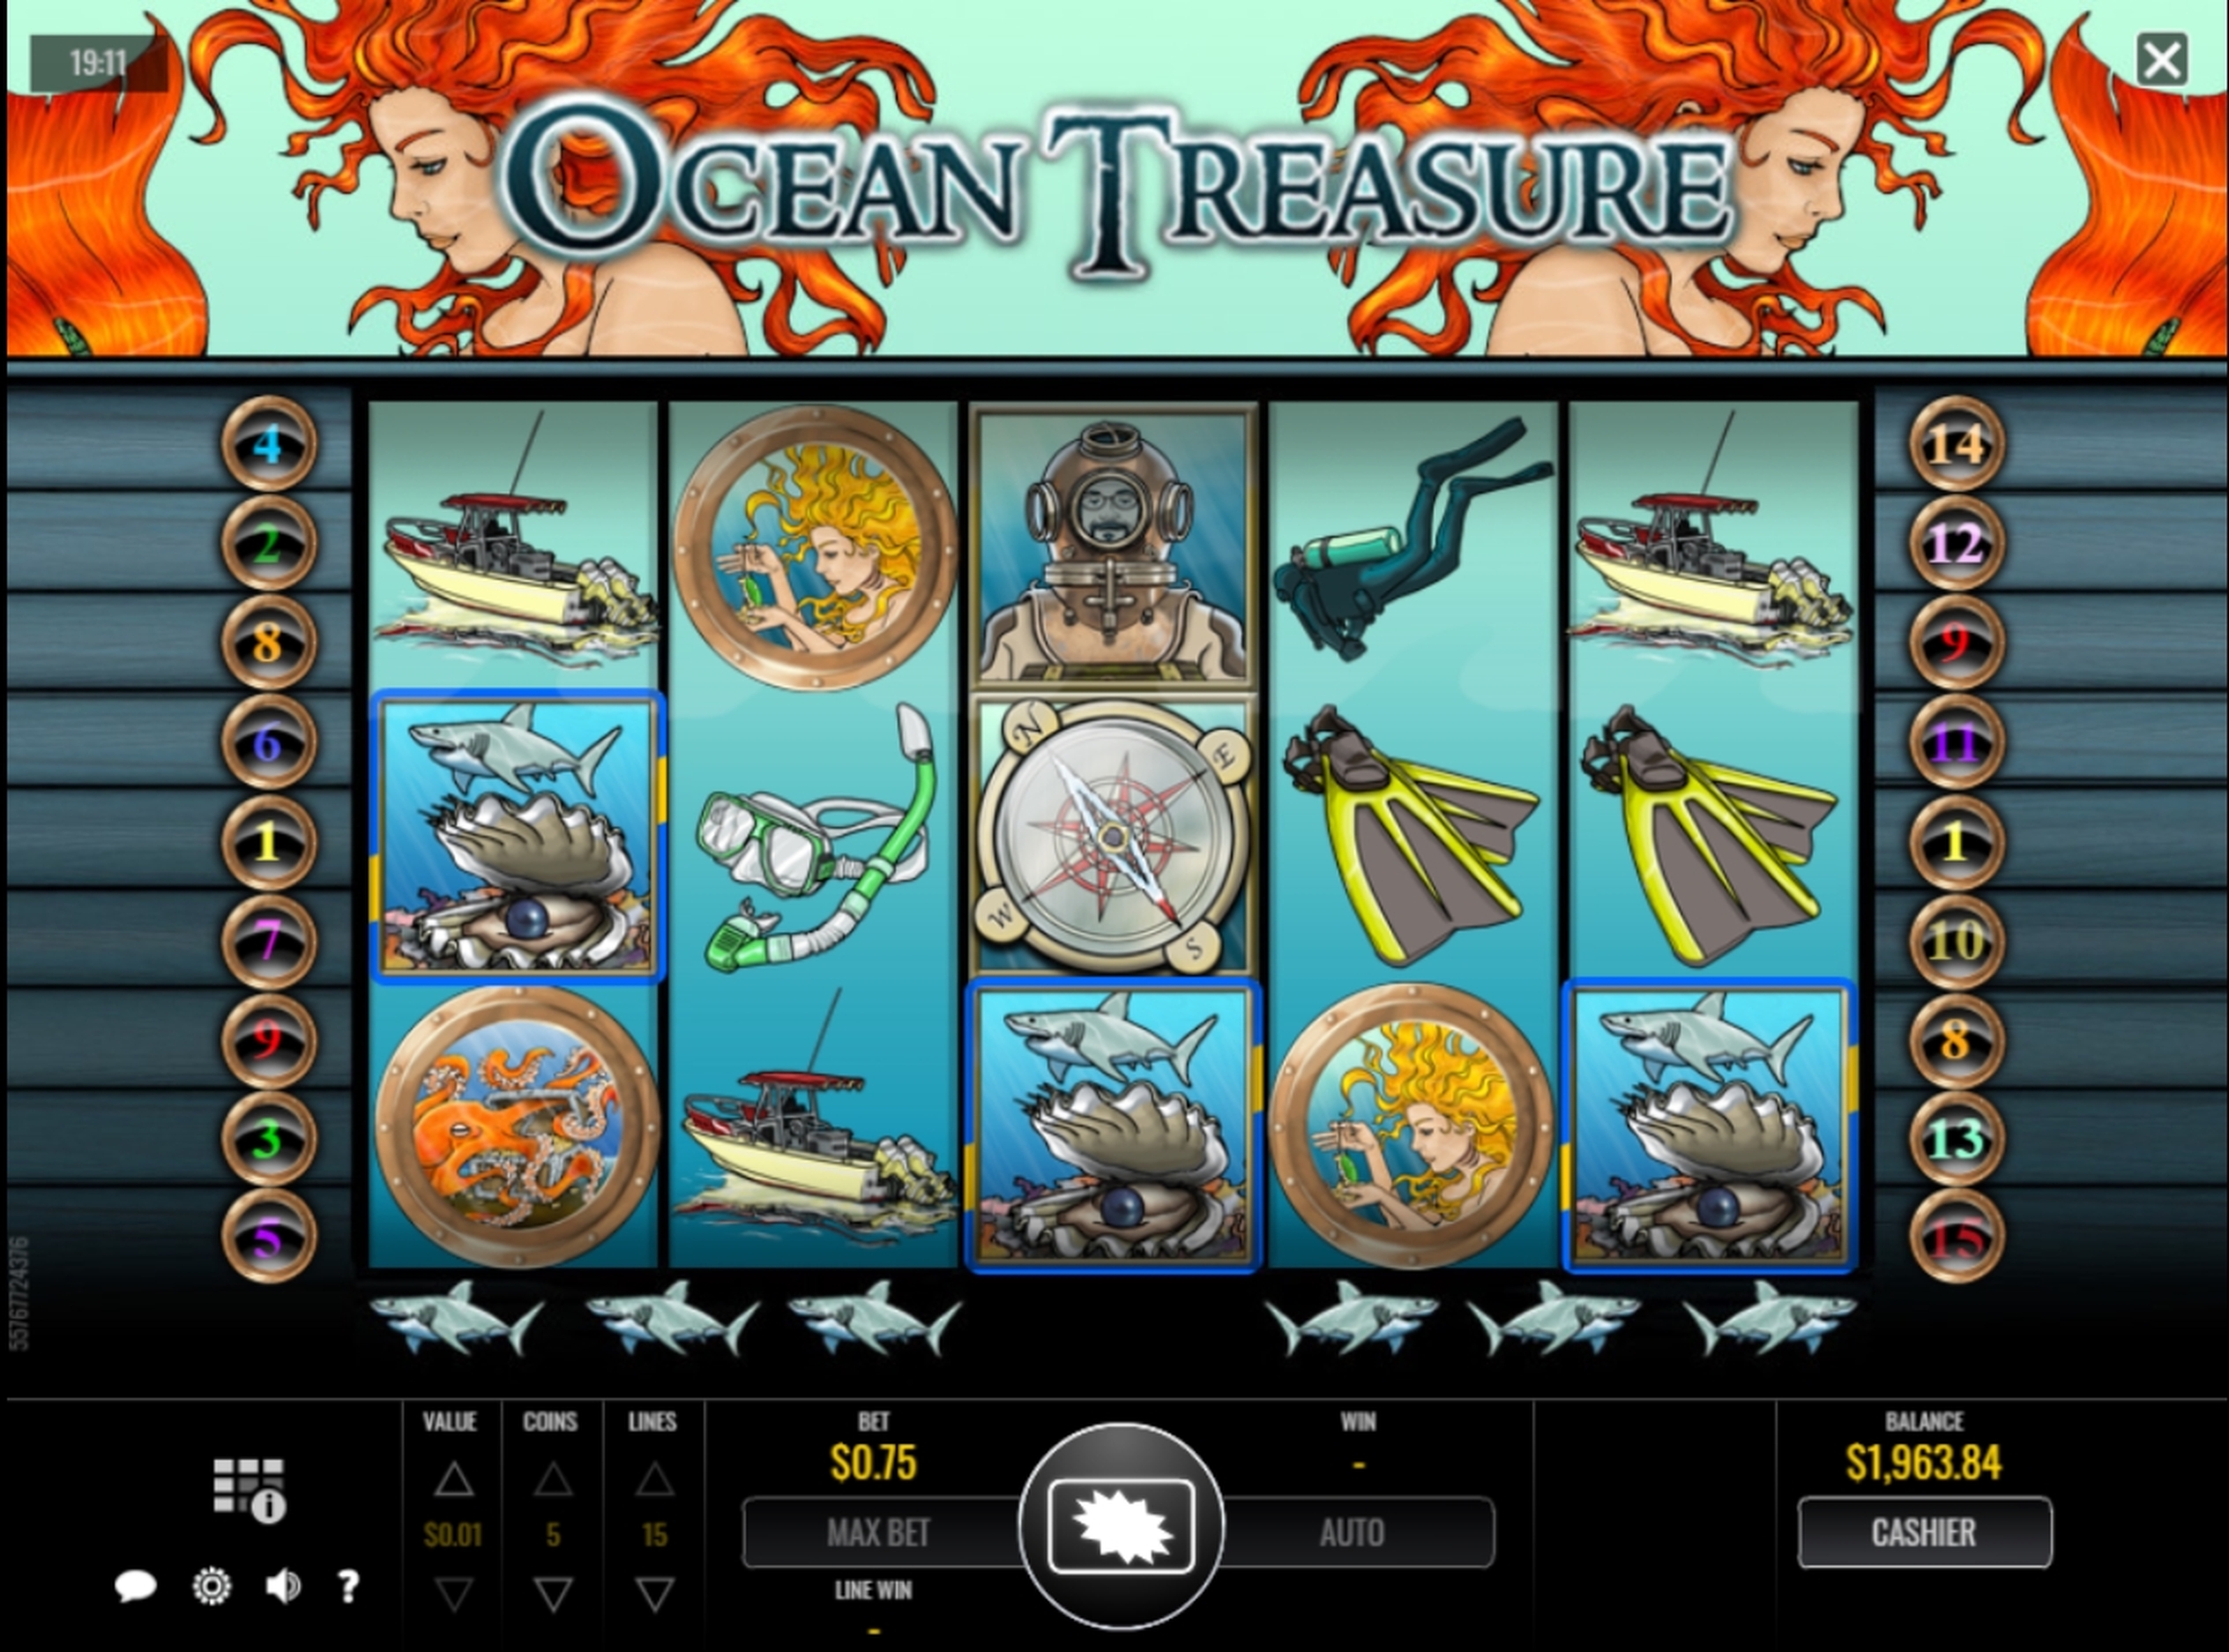 Win Money in Ocean Treasure Free Slot Game by Rival